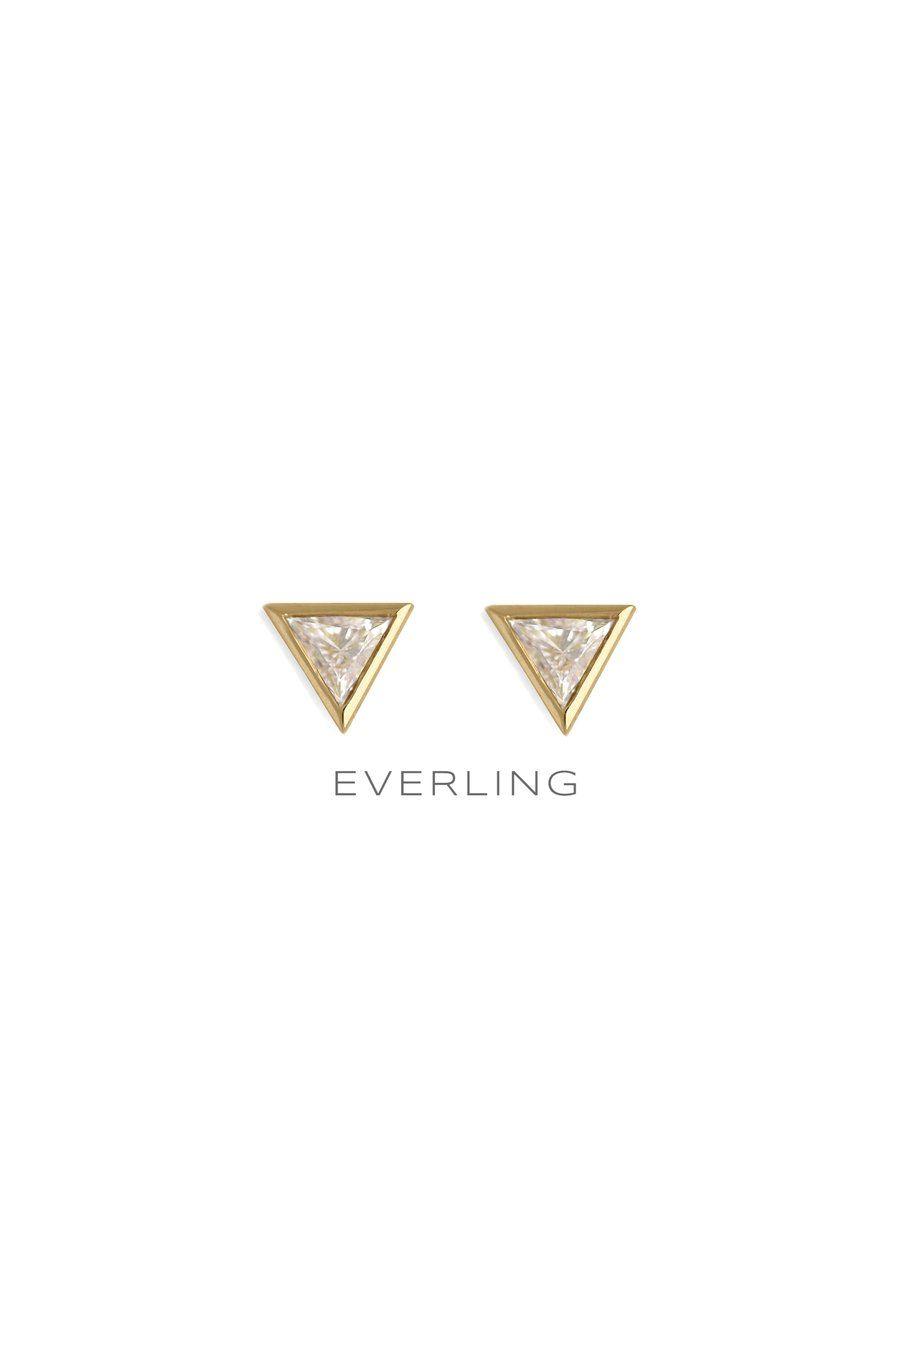 Gold Triangle Logo - Bermuda- Diamond Triangle Earrings on Everling's Shop page ...